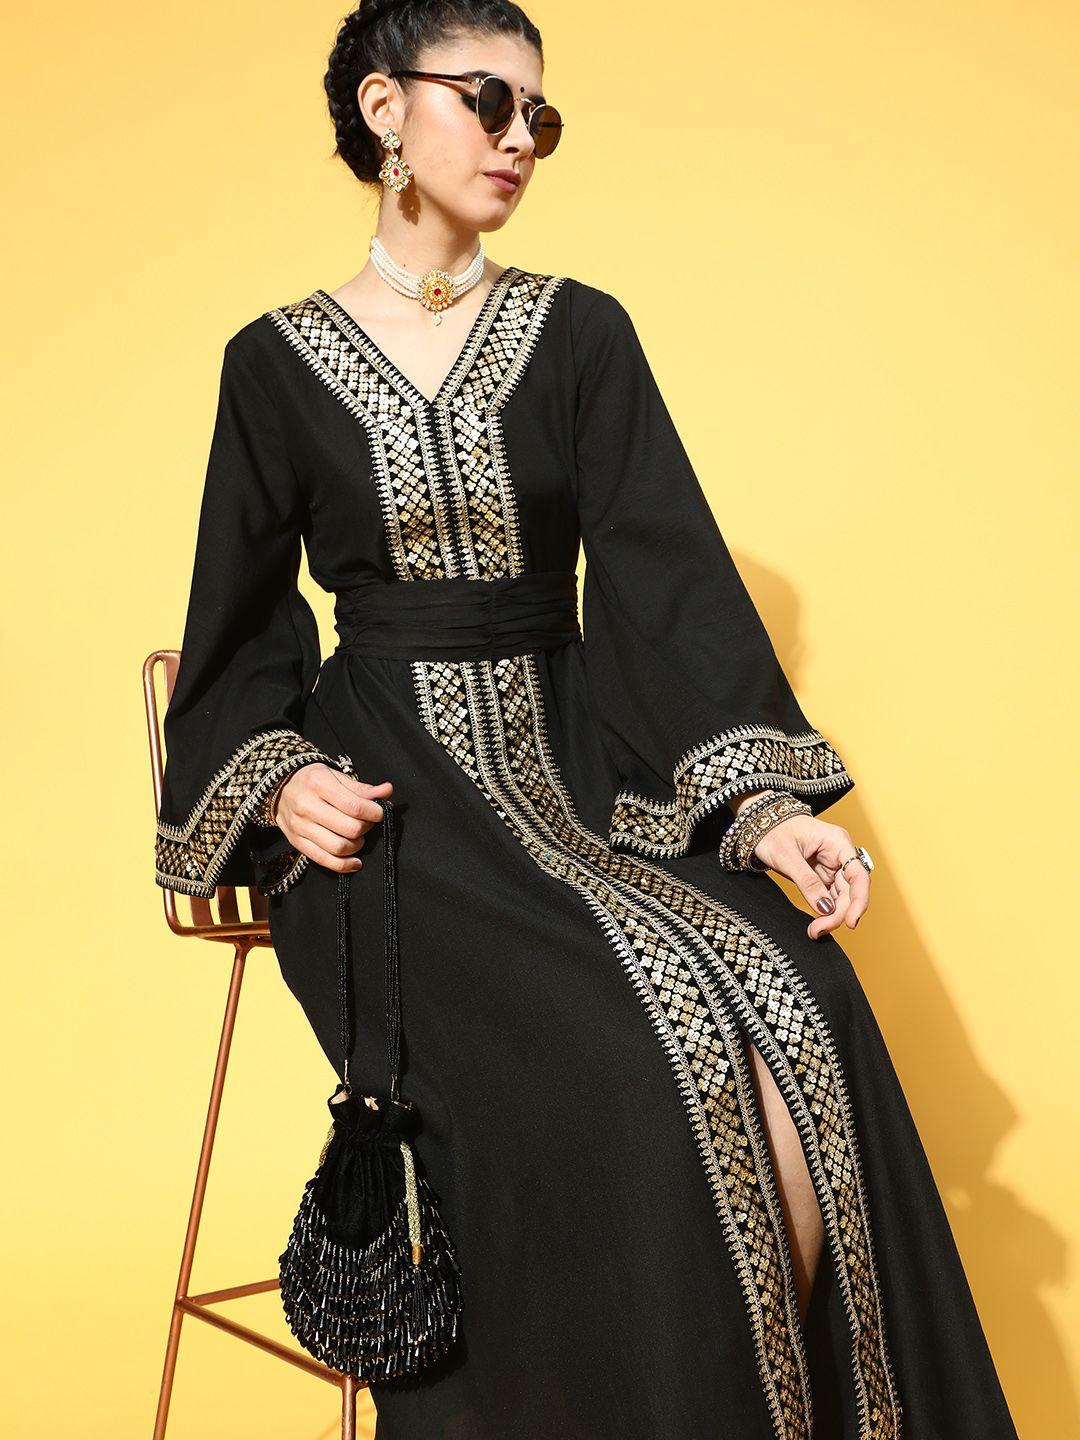 inddus women black & golden ethnic motifs ethnic a-line midi dress with front slit